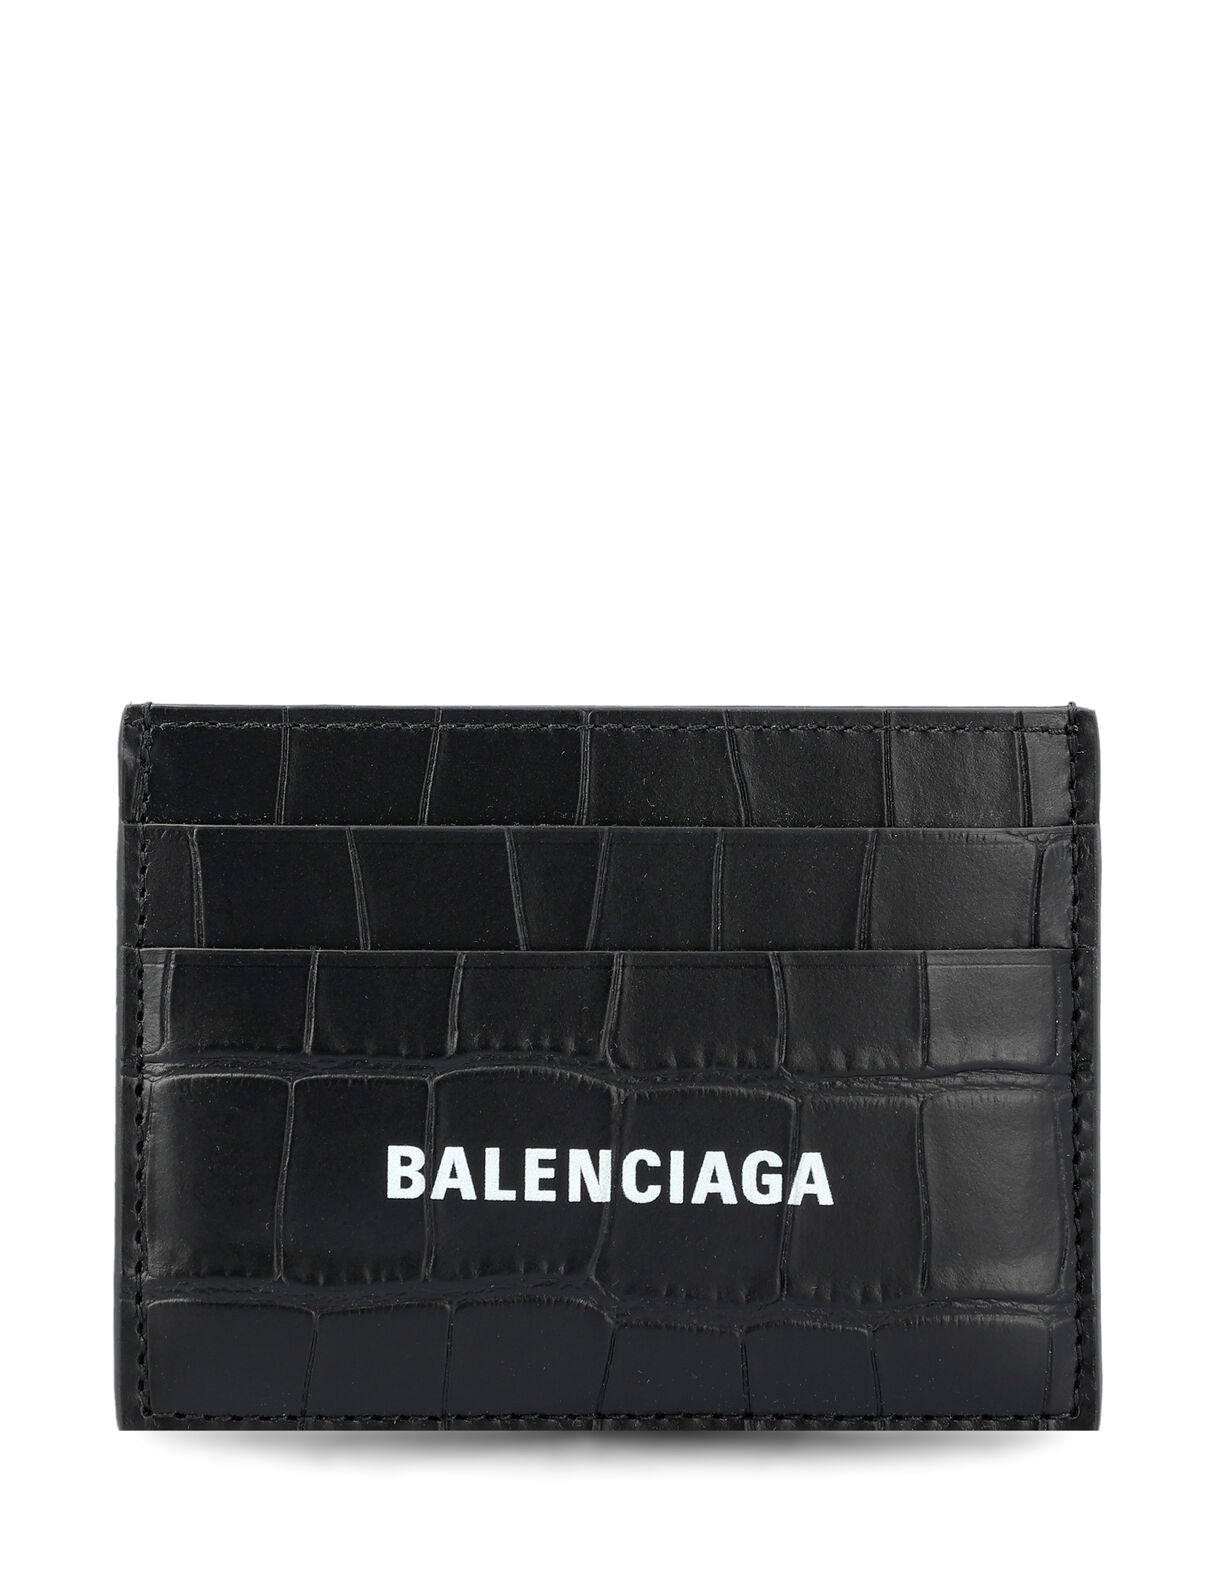 BALENCIAGA-OUTLET-SALE-CASH CARD HOLDER-ARCHIVIST